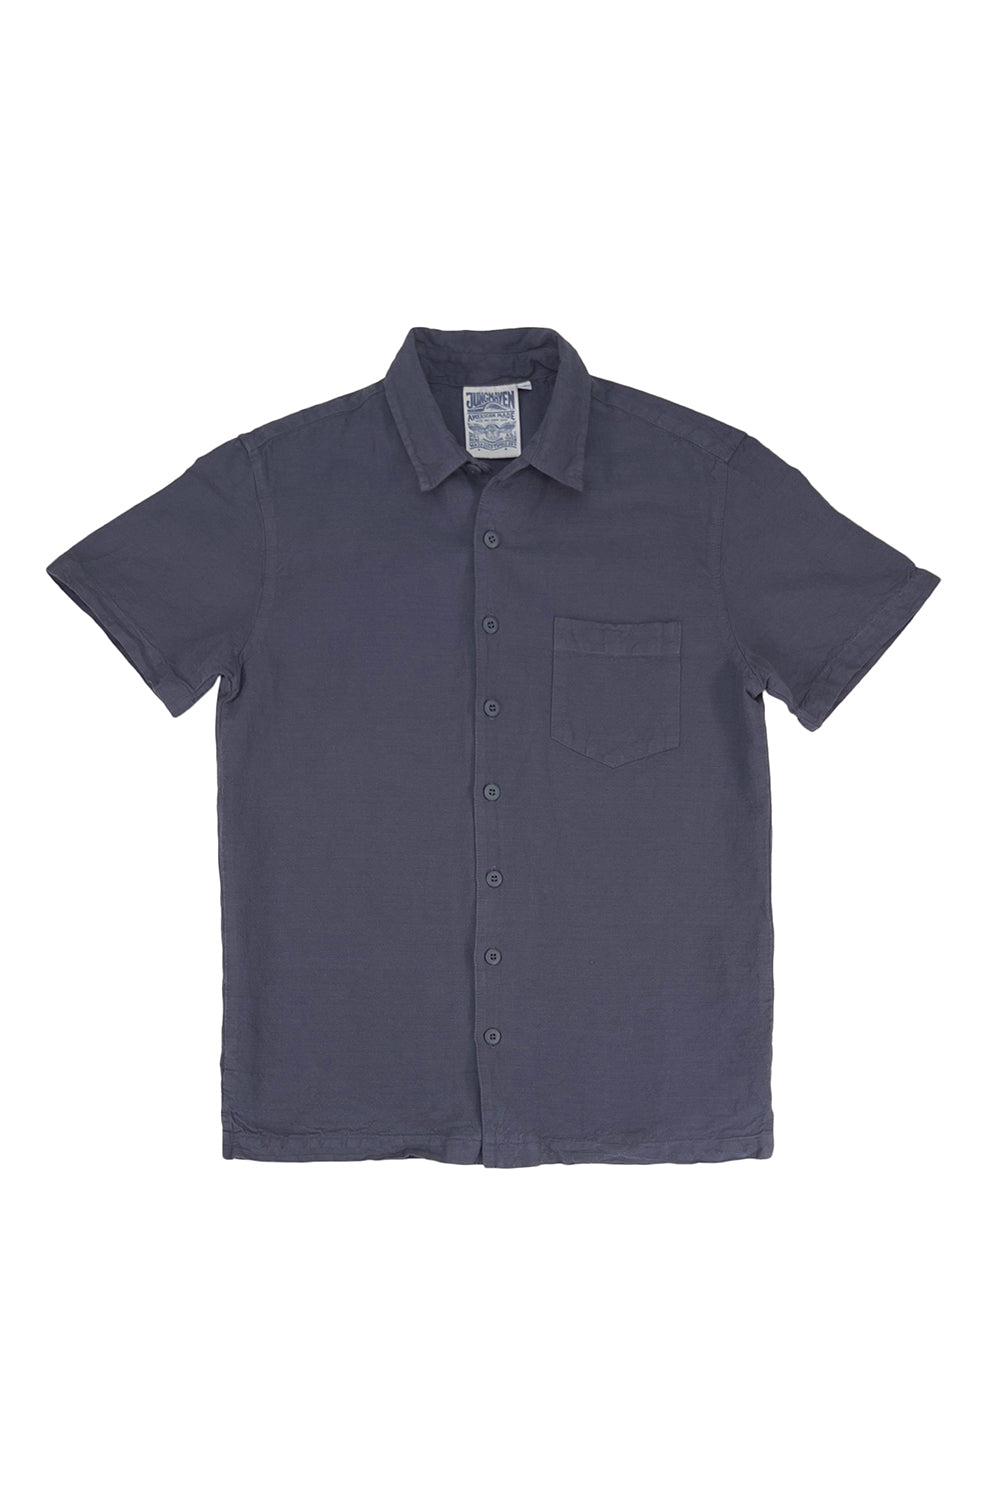 Rincon Shirt | Jungmaven Hemp Clothing & Accessories / Color: Diesel Gray